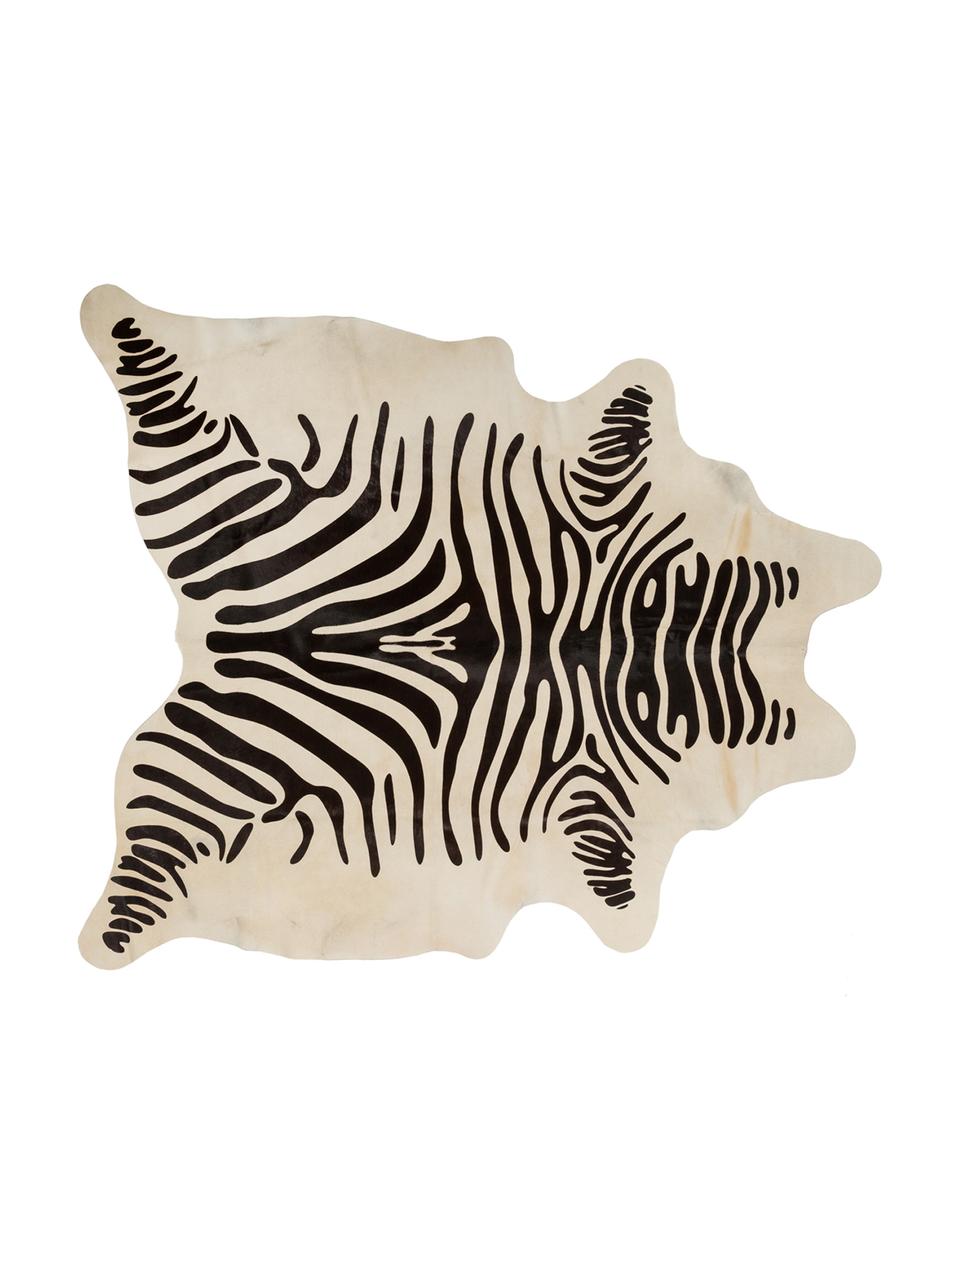 Tappeto in pelle di mucca Zebra, Pelle di mucca, stampata, Bianco, nero, L 220 x P 180 cm